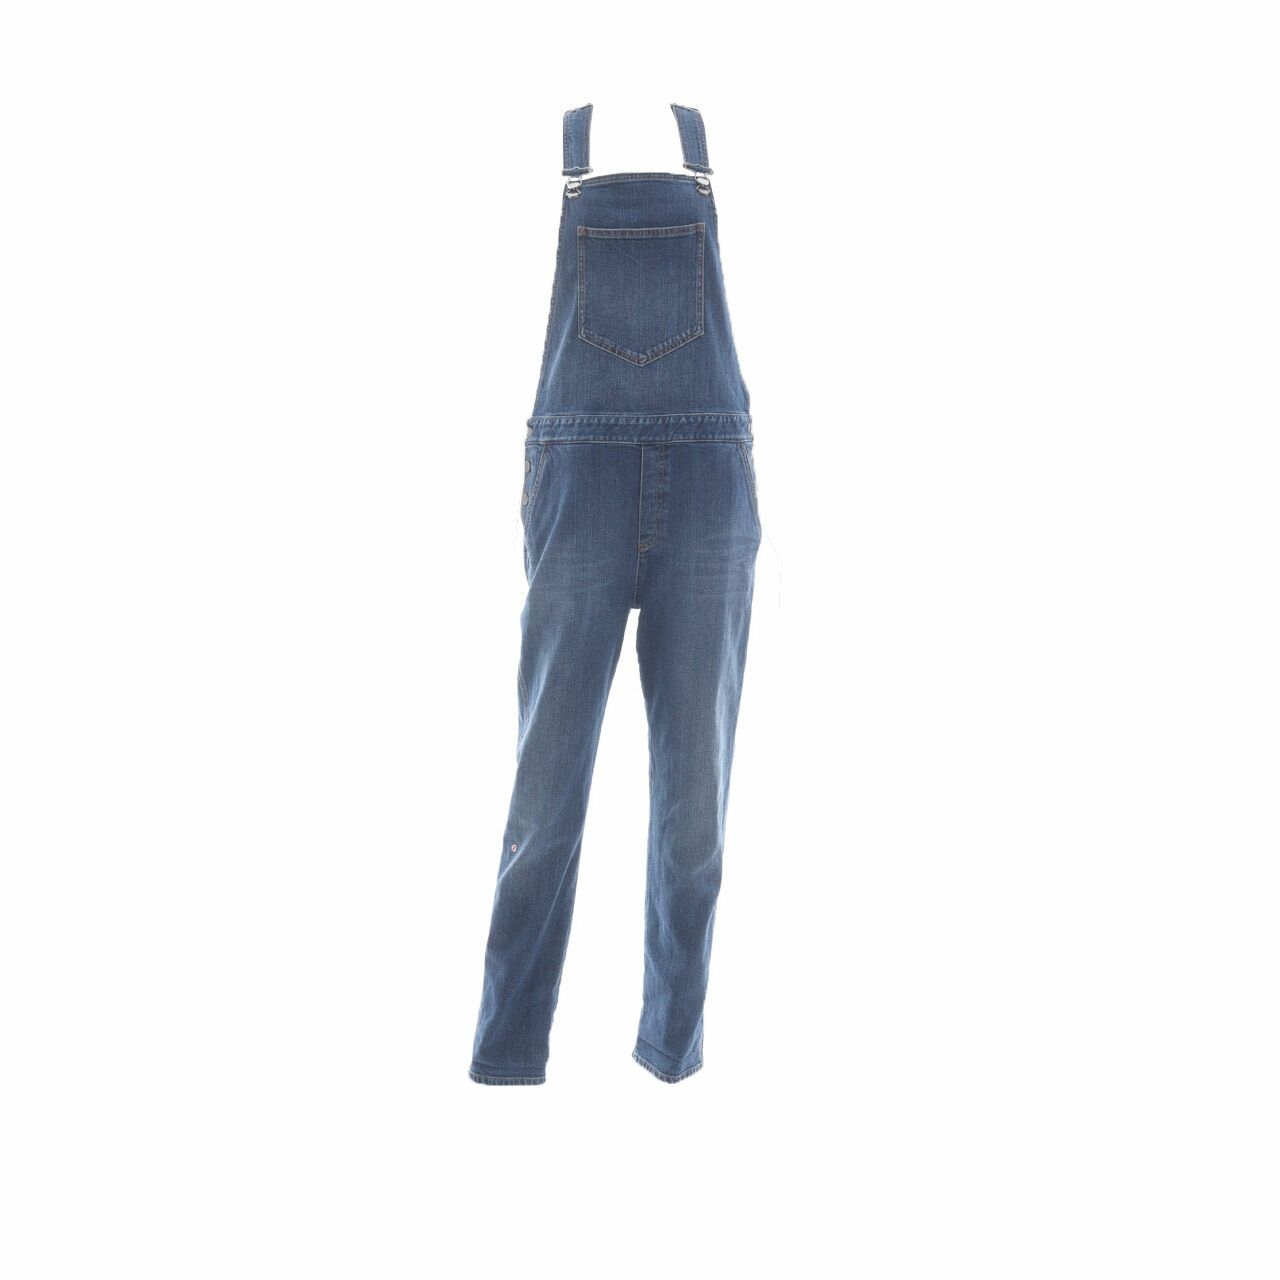 Stella McCartney Indigo Blue Washed Denim Overalls Jumpsuit